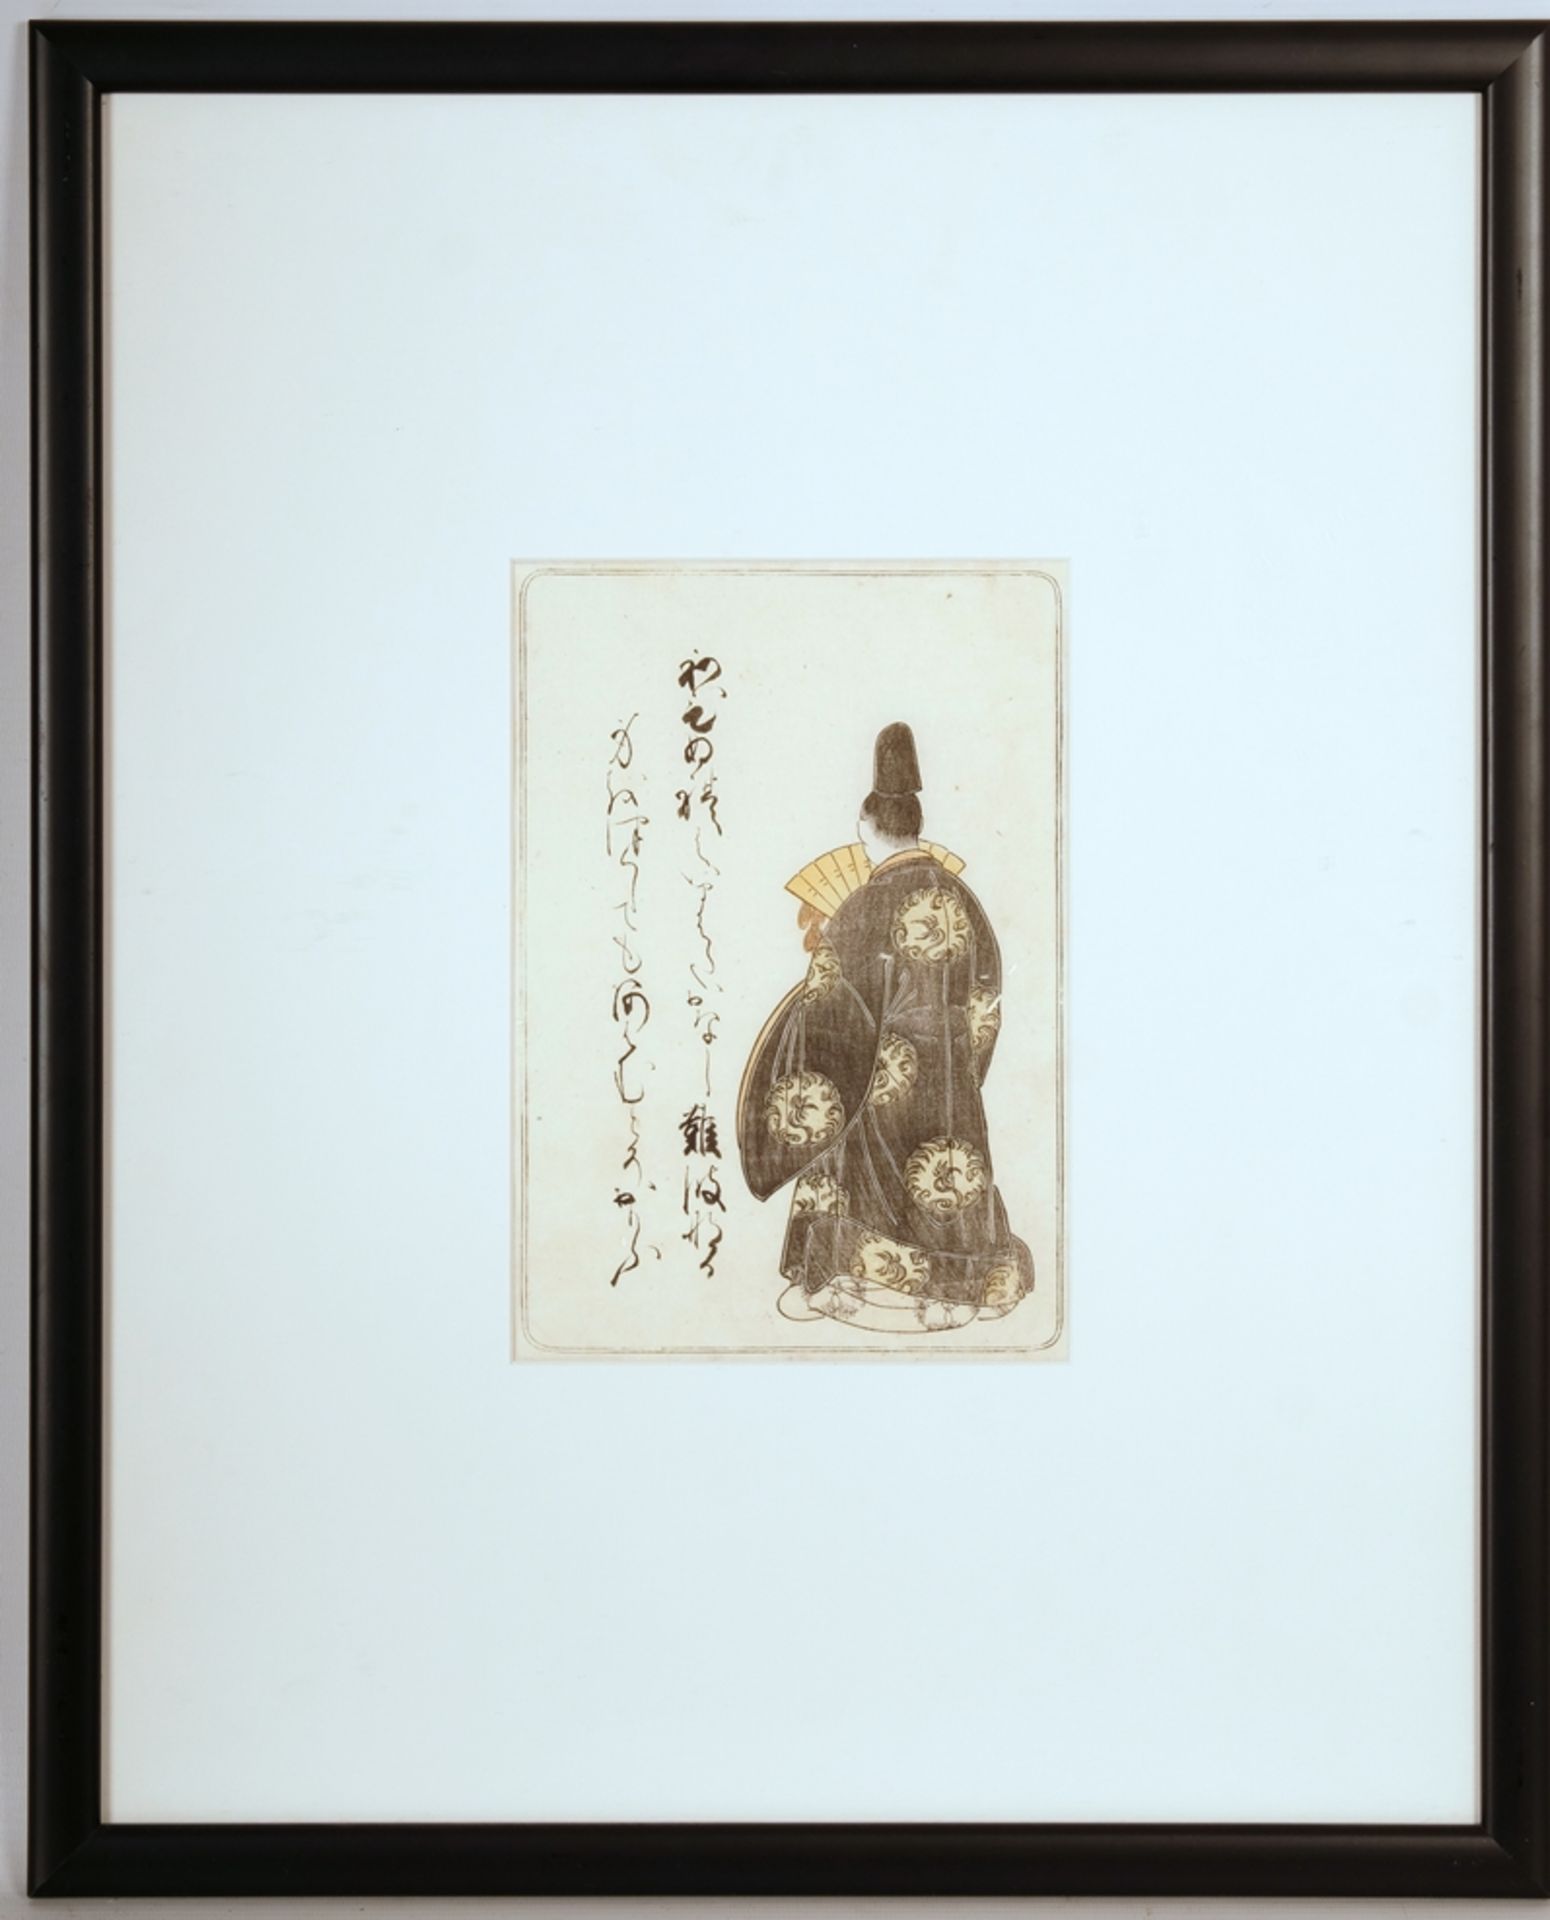 Shunsho, Katsukawa (1726-1792) "Minamoto no Shigeyuki", um 1774, Farbholzschnitt. - Bild 2 aus 2